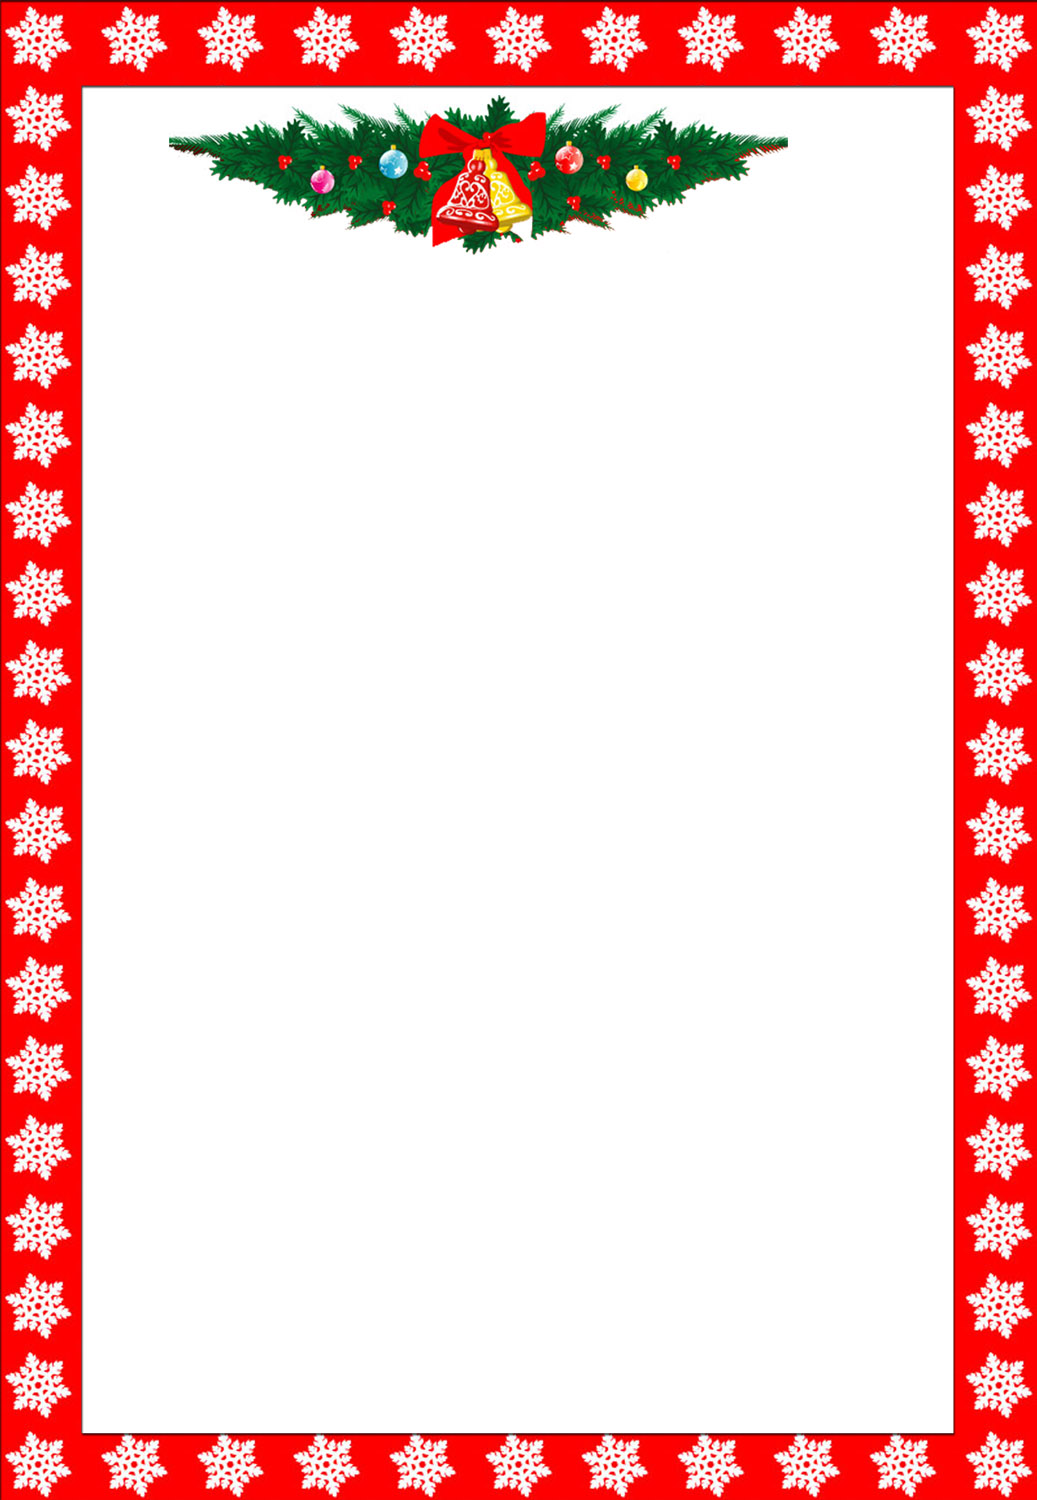 Free Christmas Clipart Border - Christmas Clipart Border